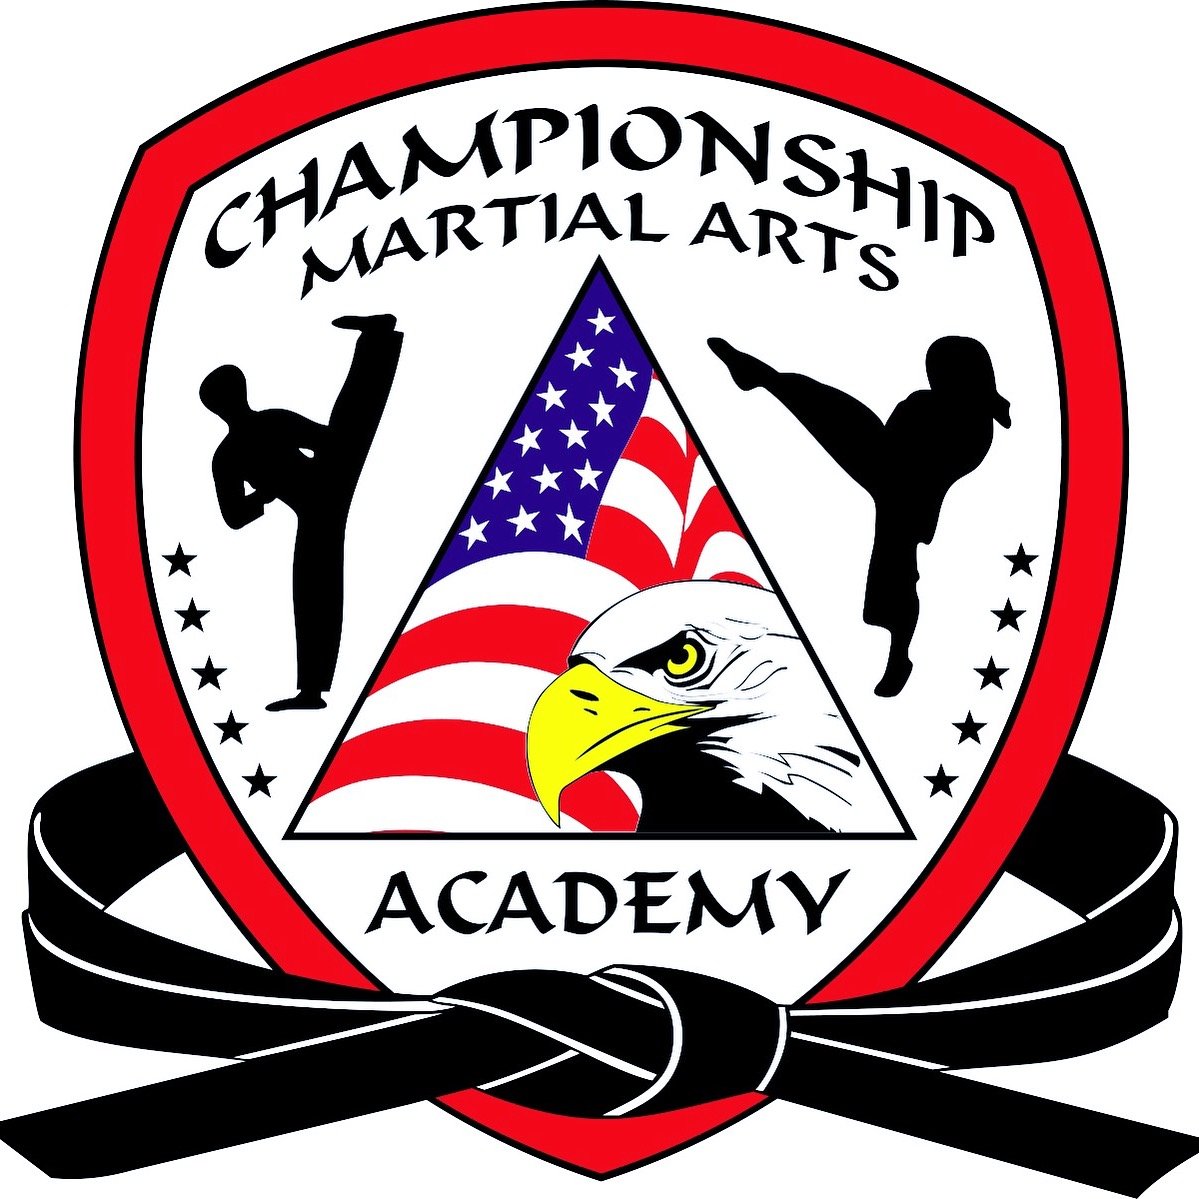 Championship Martial Arts Academy logo